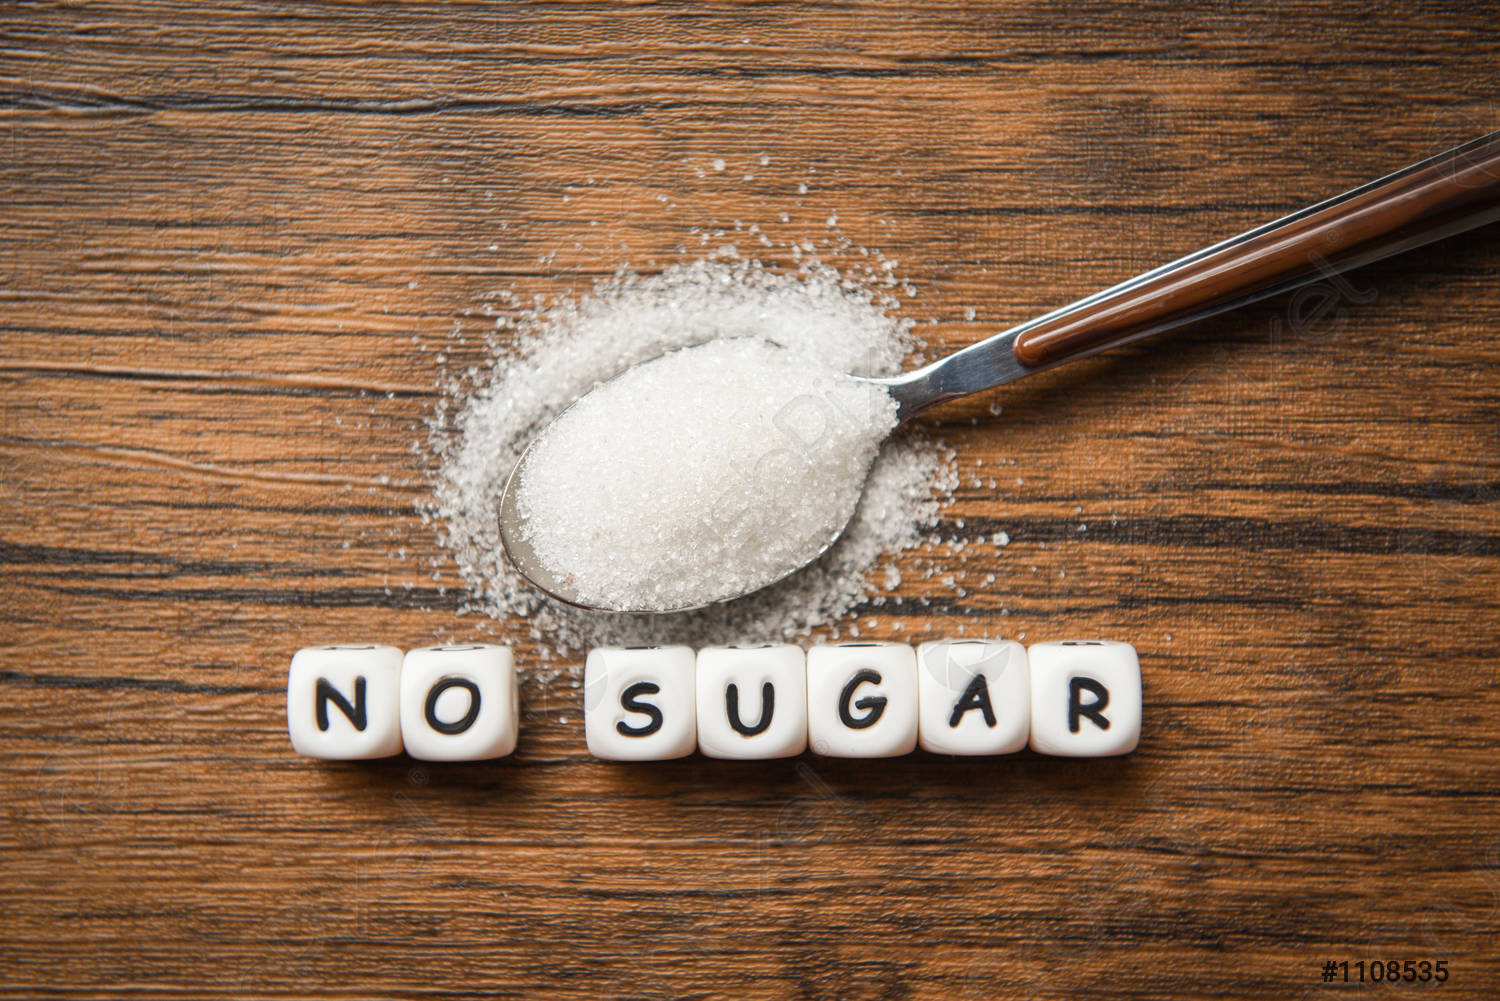 šećer_zdravlje_health_lifestyle_magazin_miss7_journal_zdrava-ishrana_prehrana-bez-šećera_sugar-free